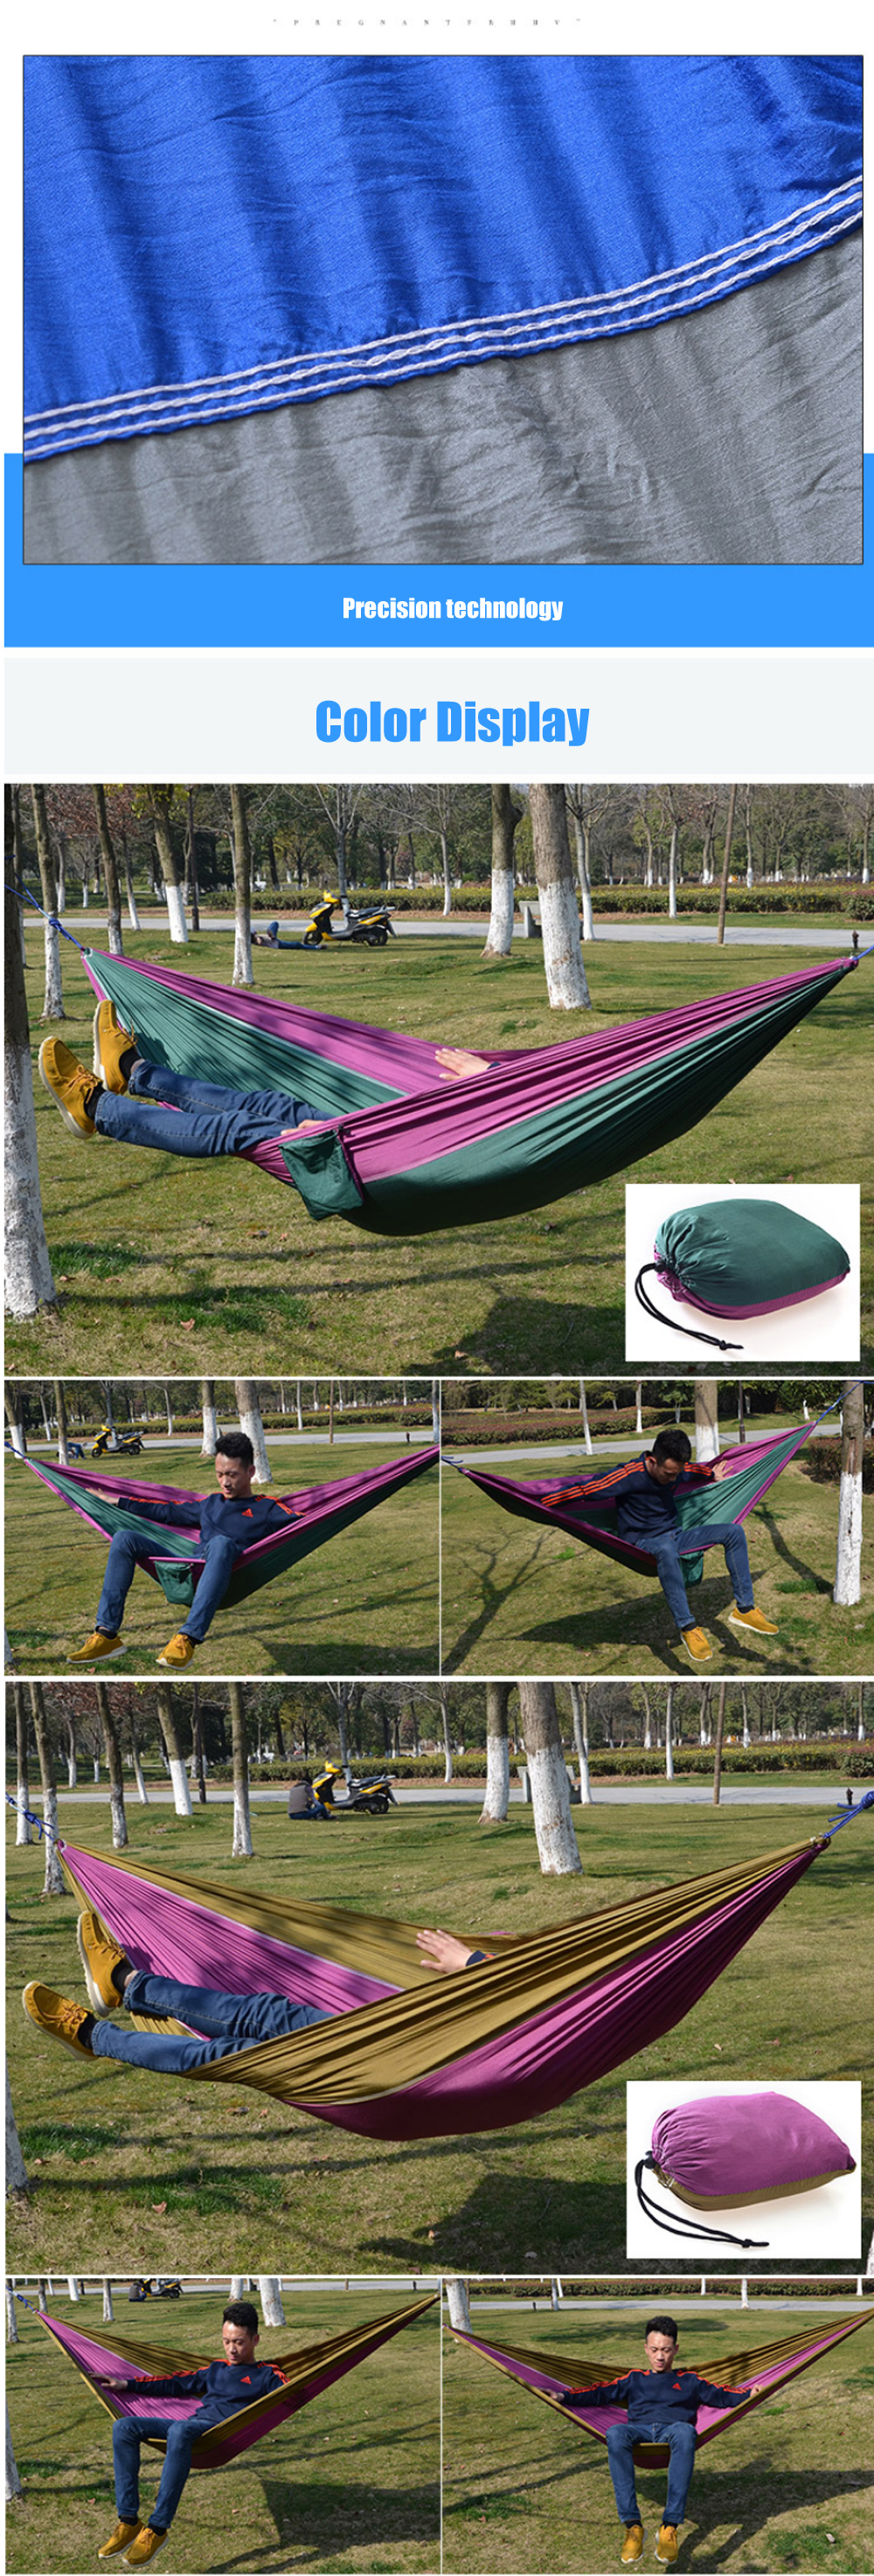 Outdoor-Camping-Hammock-Parachute-Cloth-Lightweight-Nylon-Portable-Hammock-For-1-2-People-260-x-140C-1702141-3